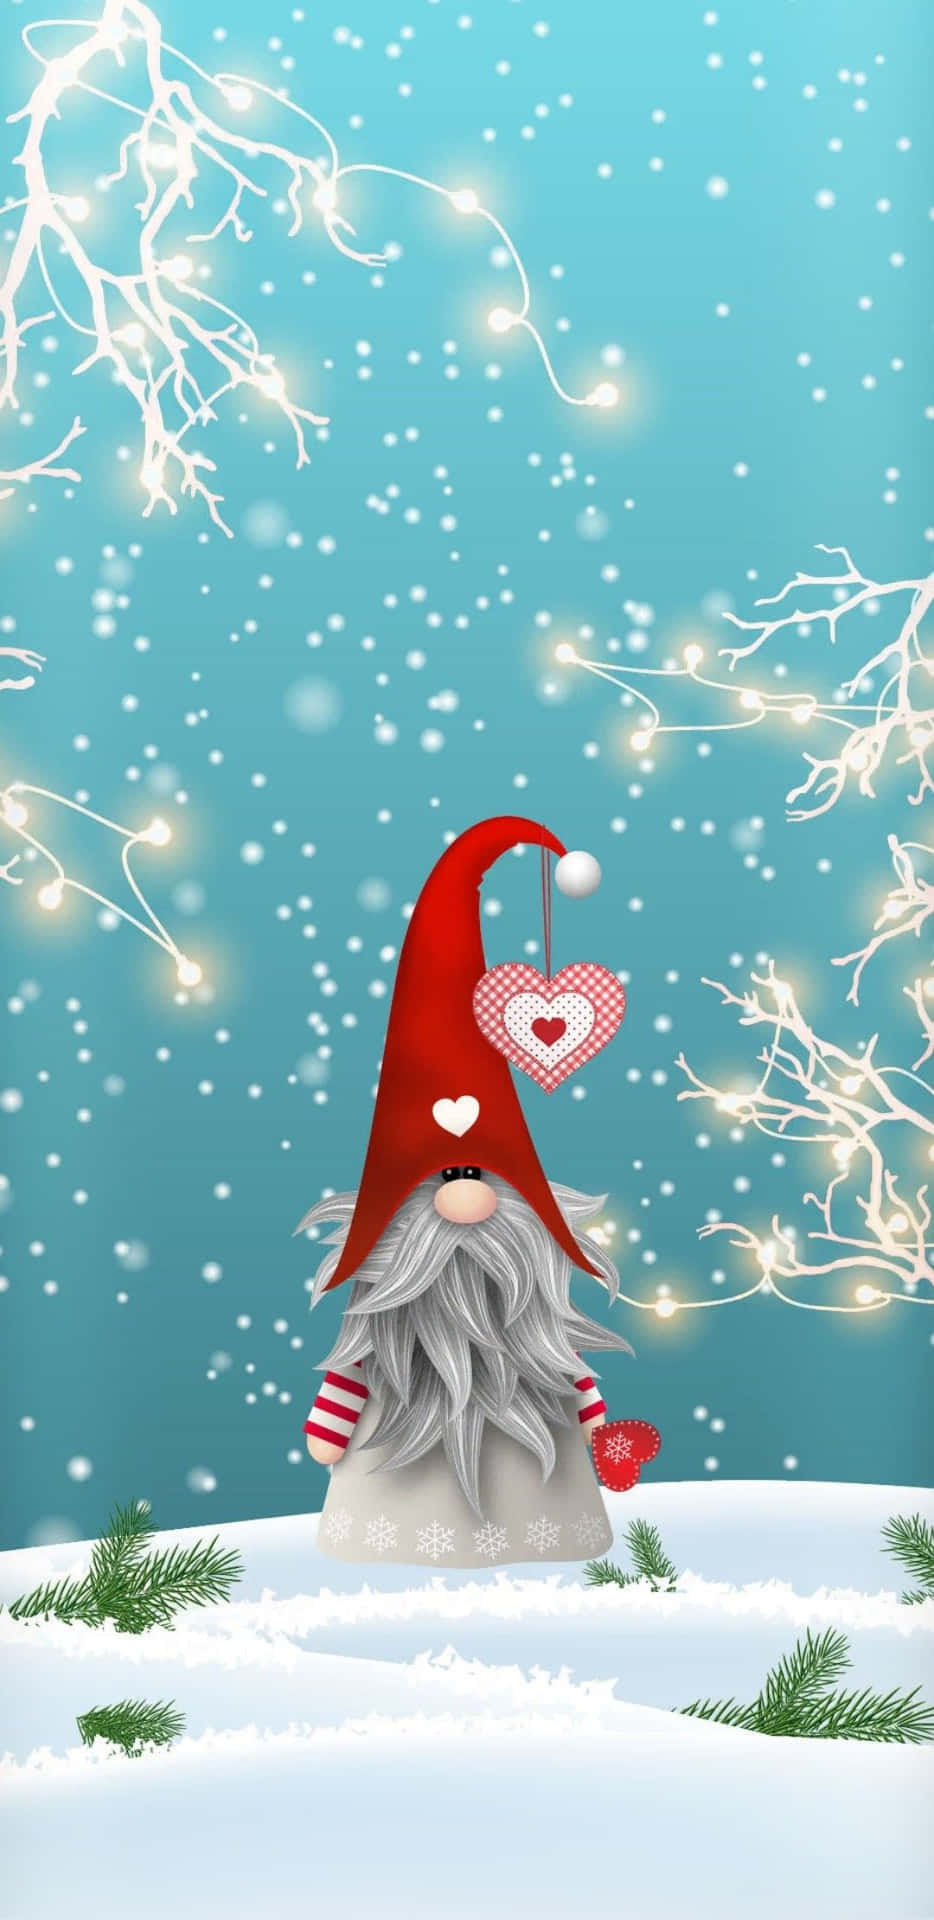 ArtStation  Christmas gnome wallpaper for phone  iPhone